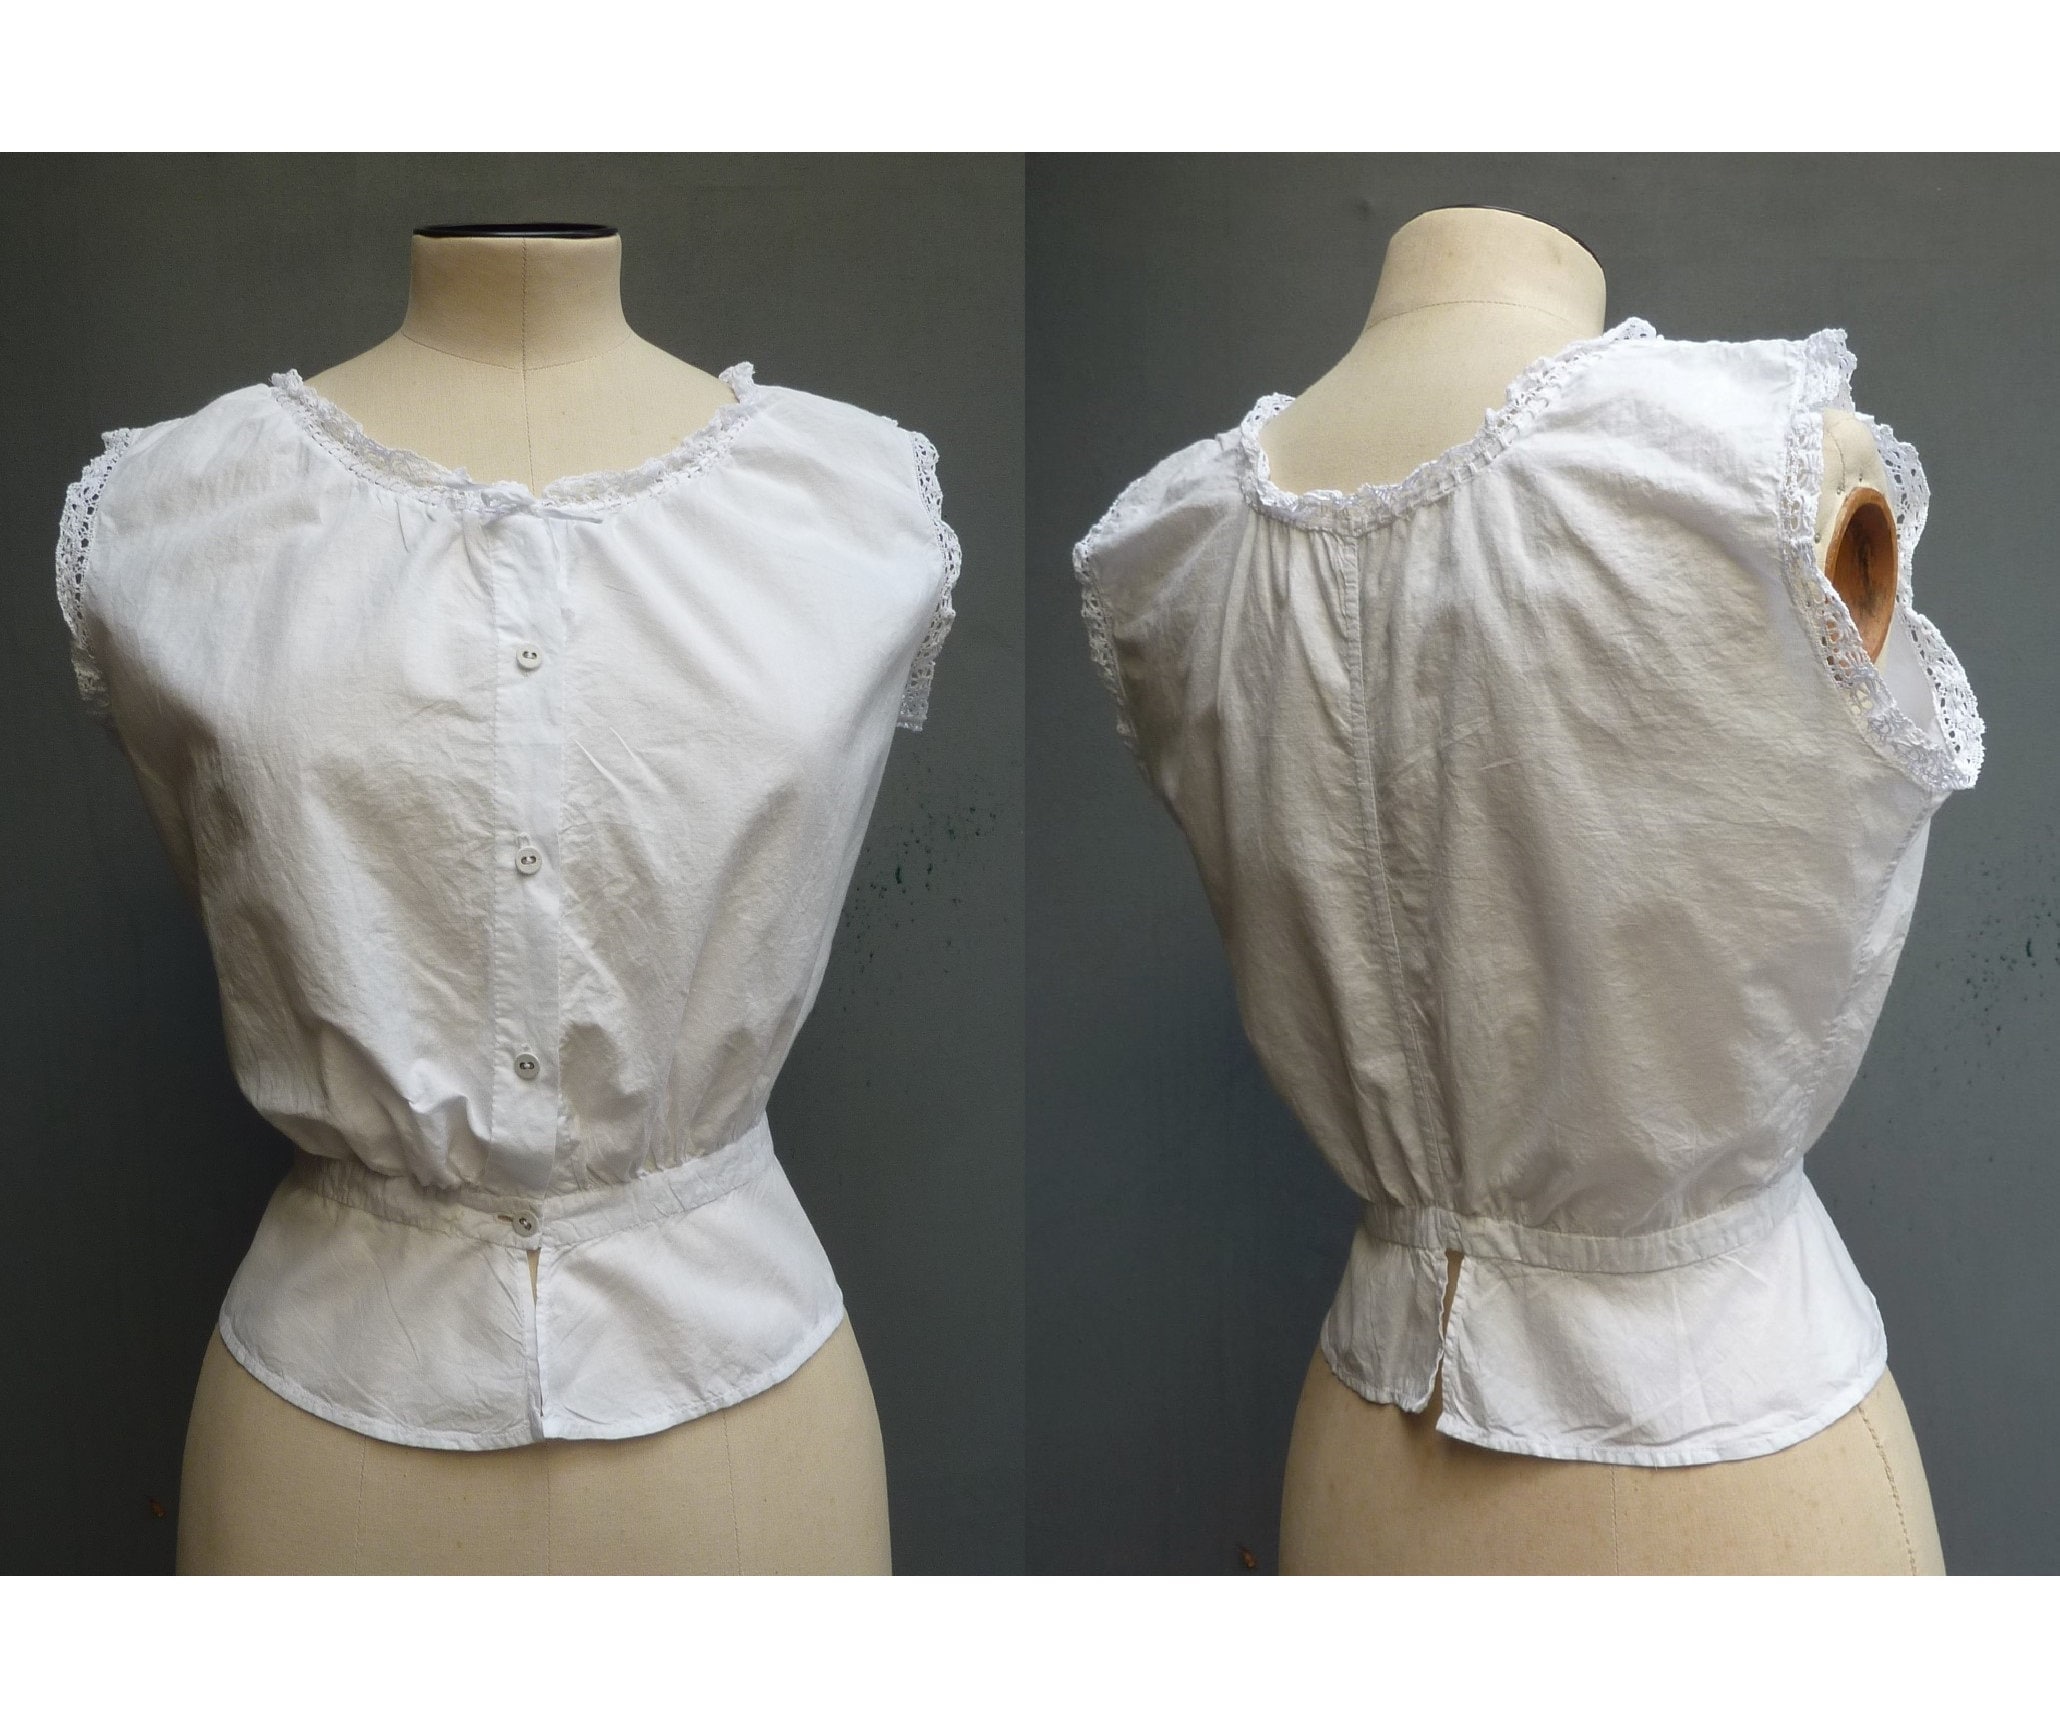 Vintage 1910s 1920s White Cotton Corset Cover Camisole Top Lace Trim Sleeveless Blouse Edwardian Teensthumbnail